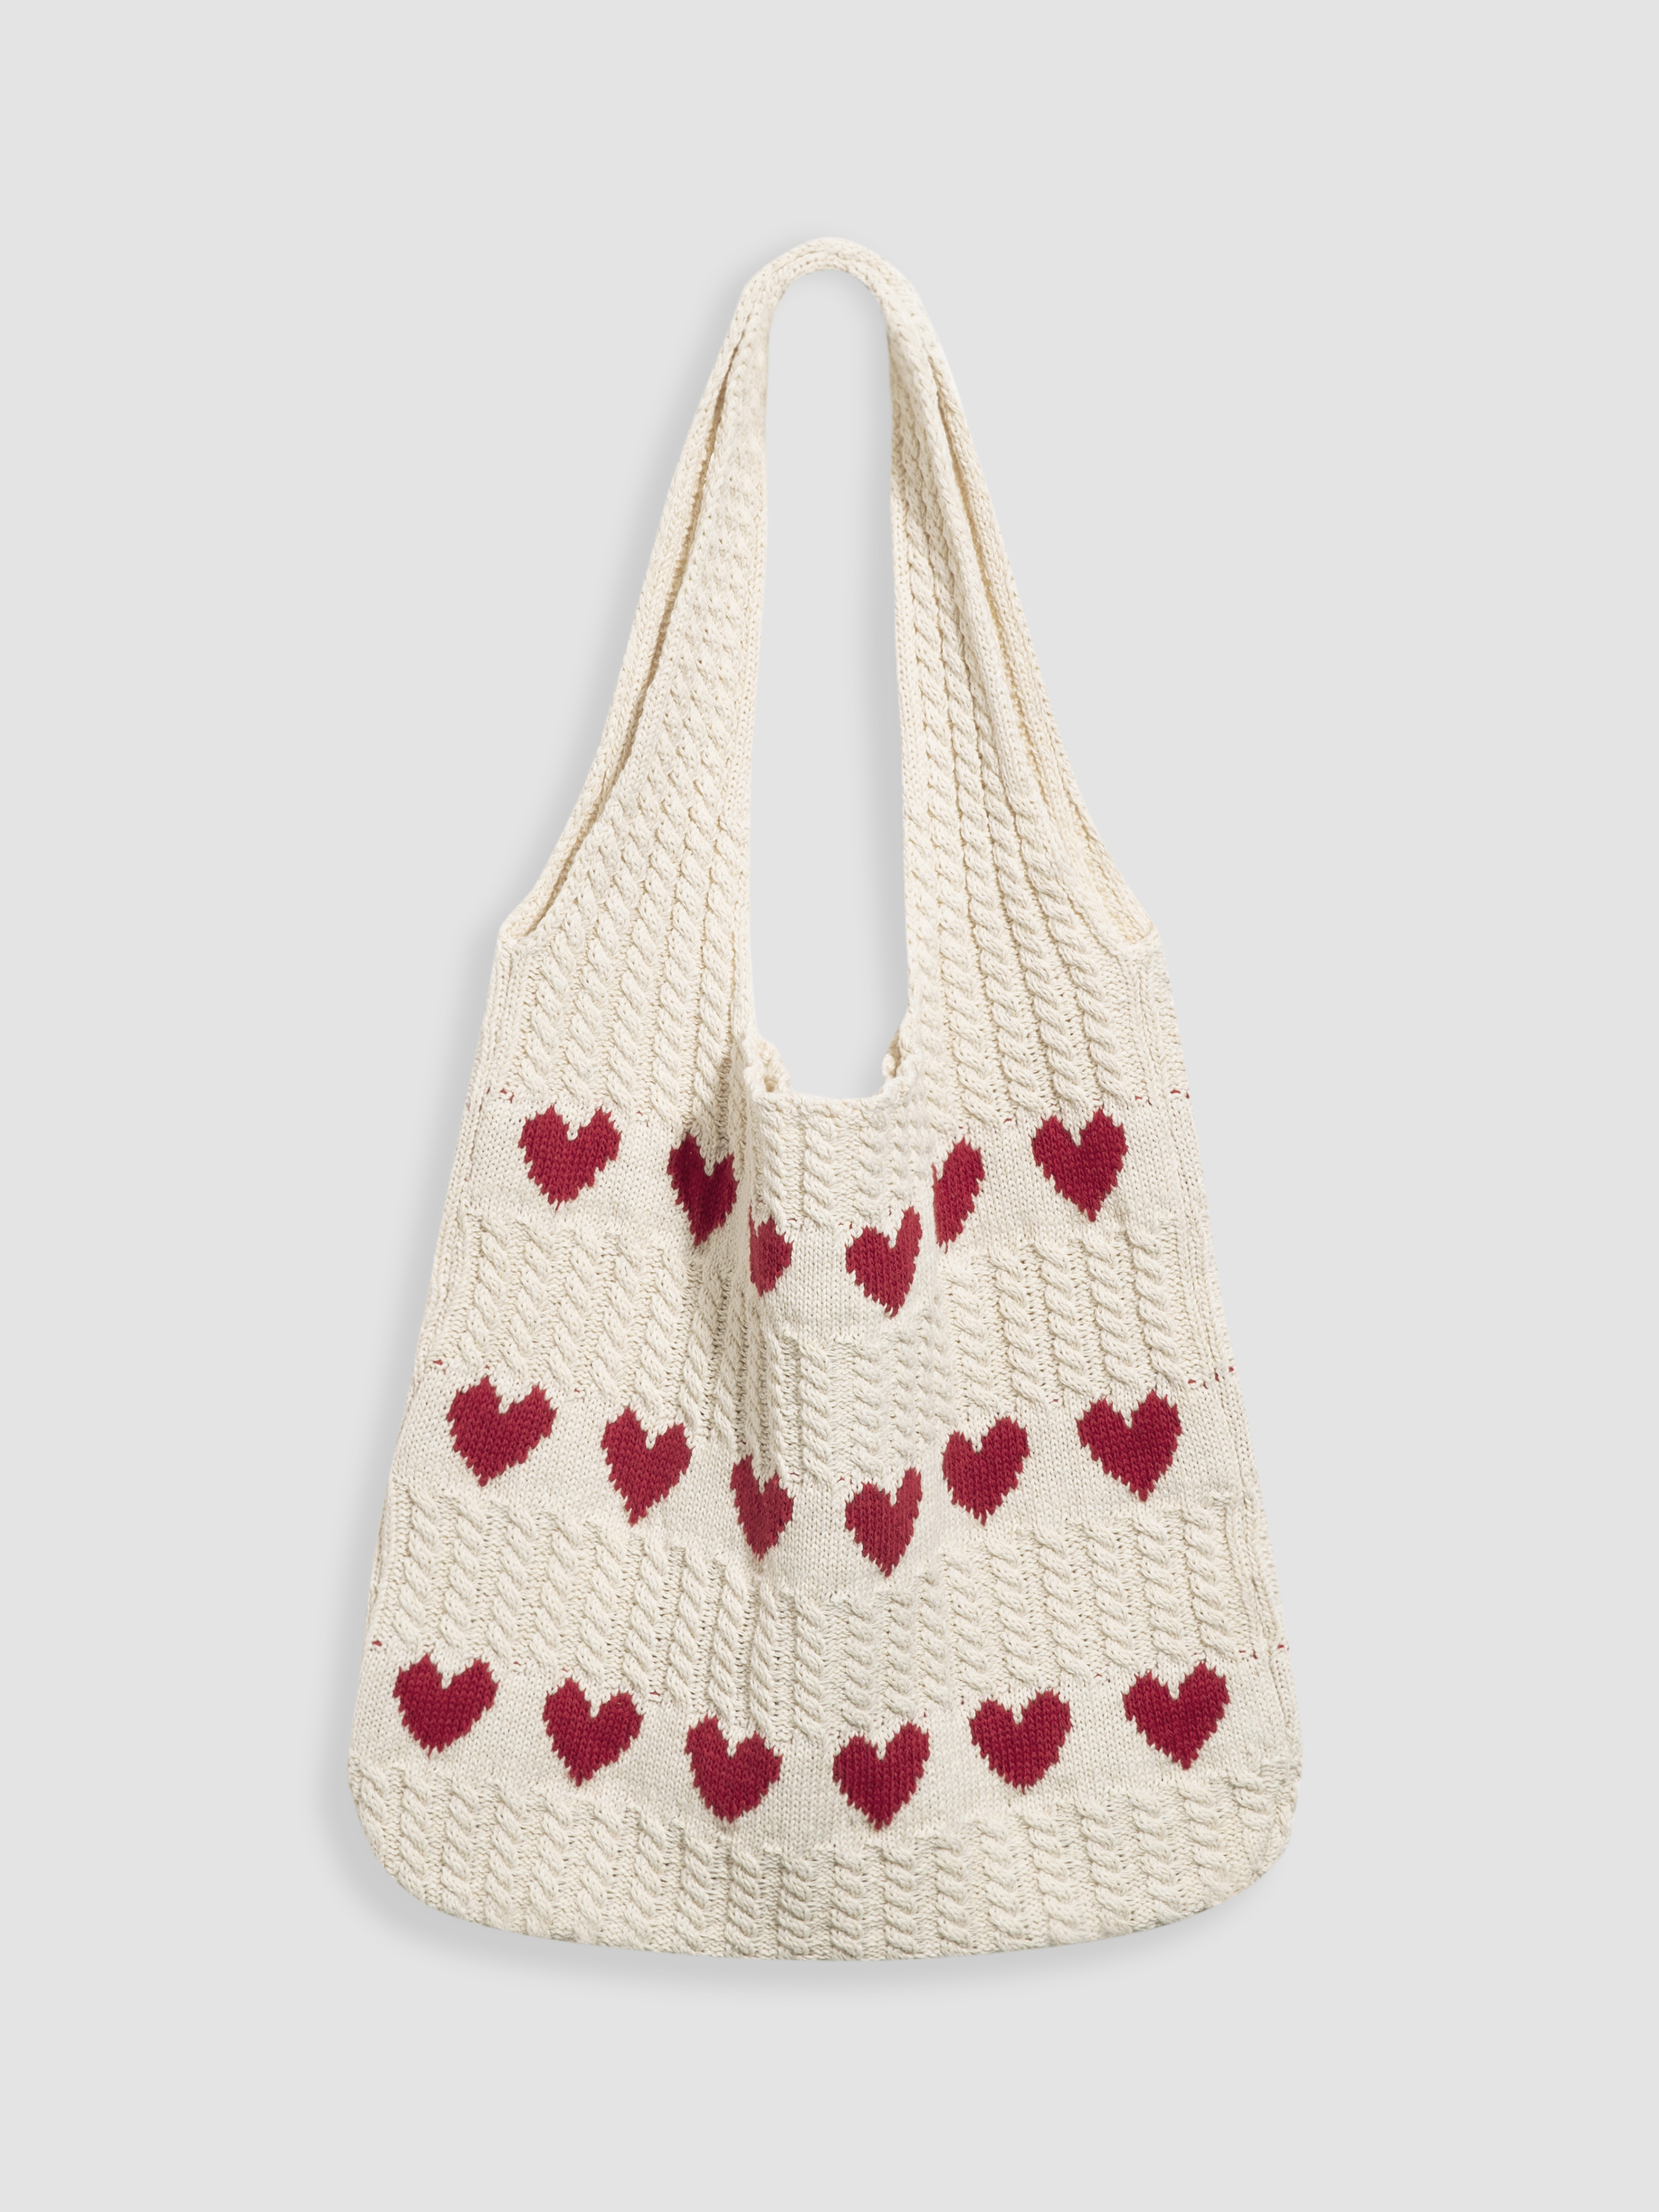 Crochet Heart Tote Bag Tutorial 